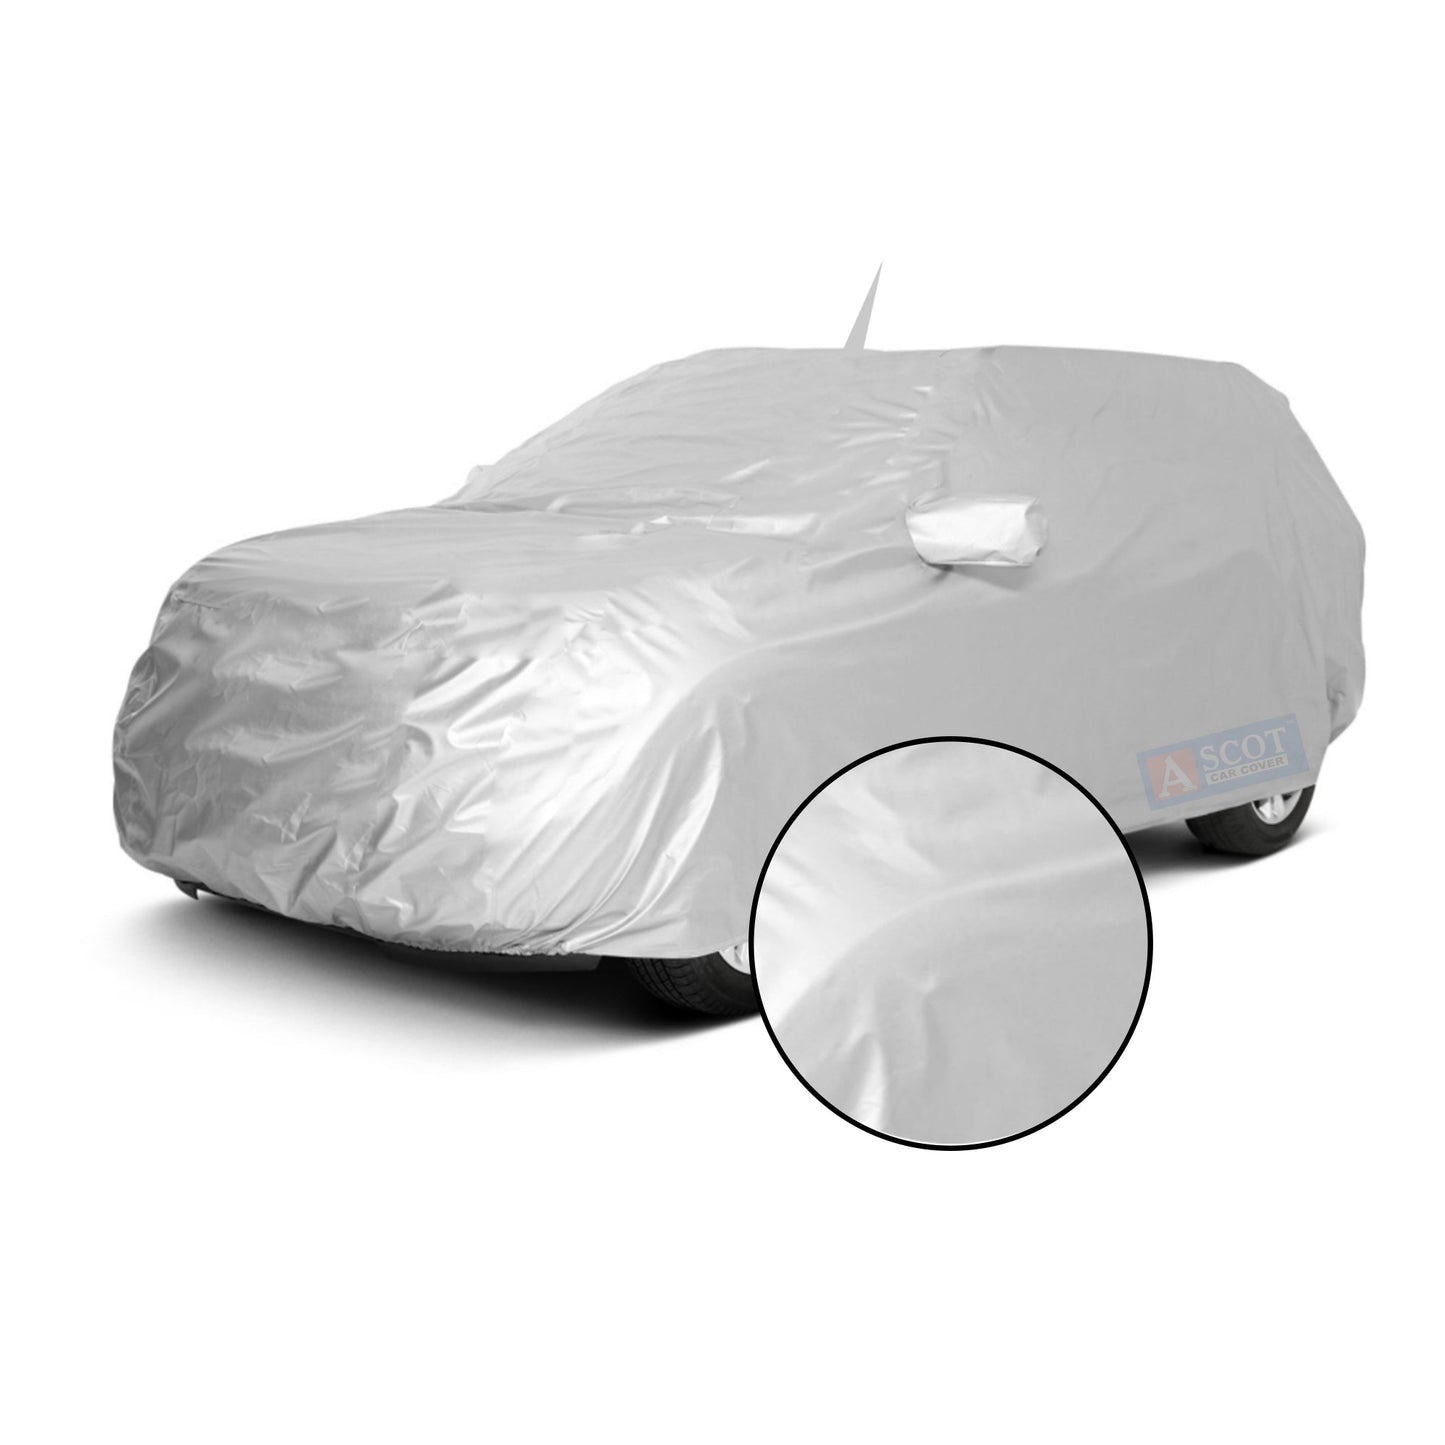 Ascot Honda Amaze 2013-2018 Model Car Body Cover Dust Proof, Trippel Stitched